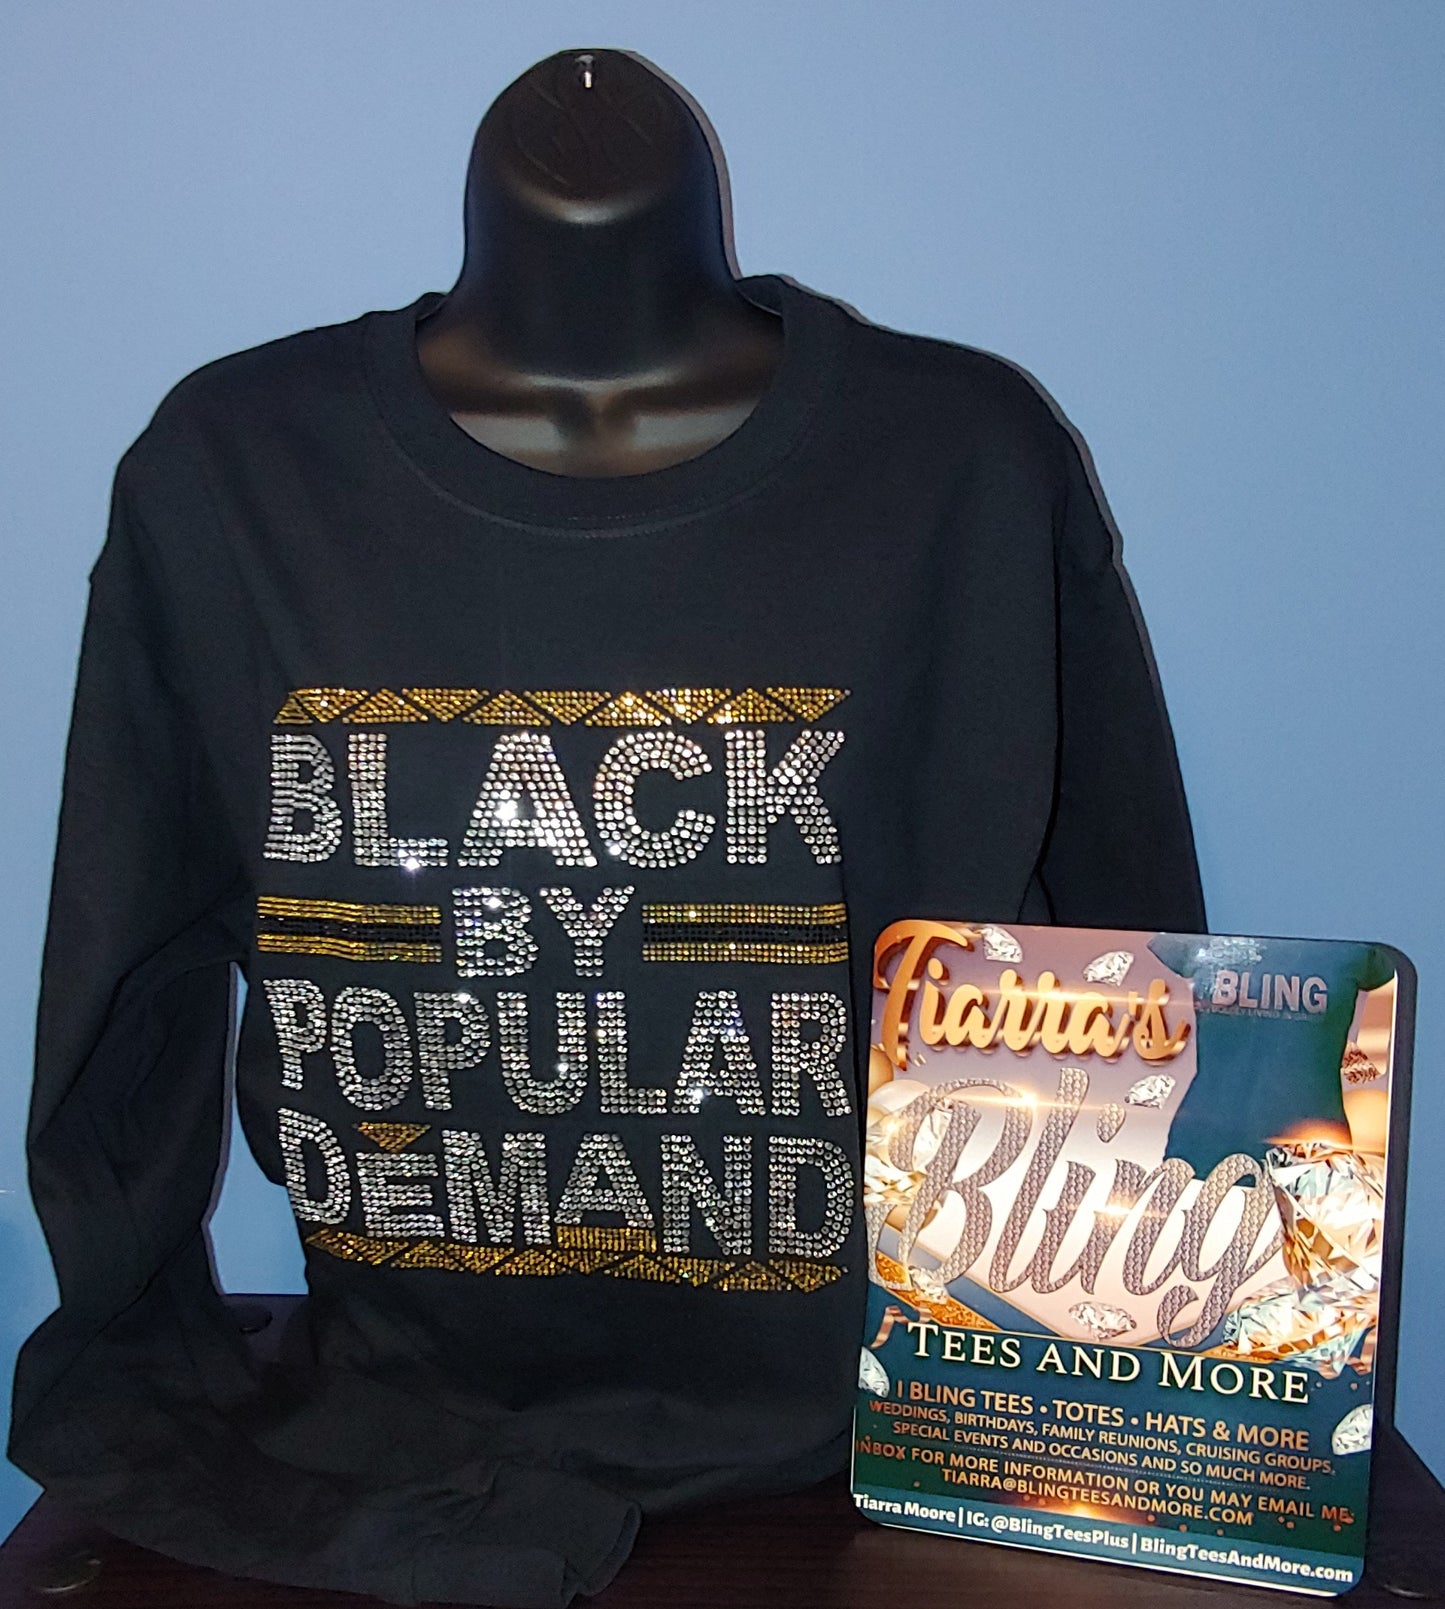 Black By Popular Demand Long-Sleeved Rhinestone Shirt Size Large